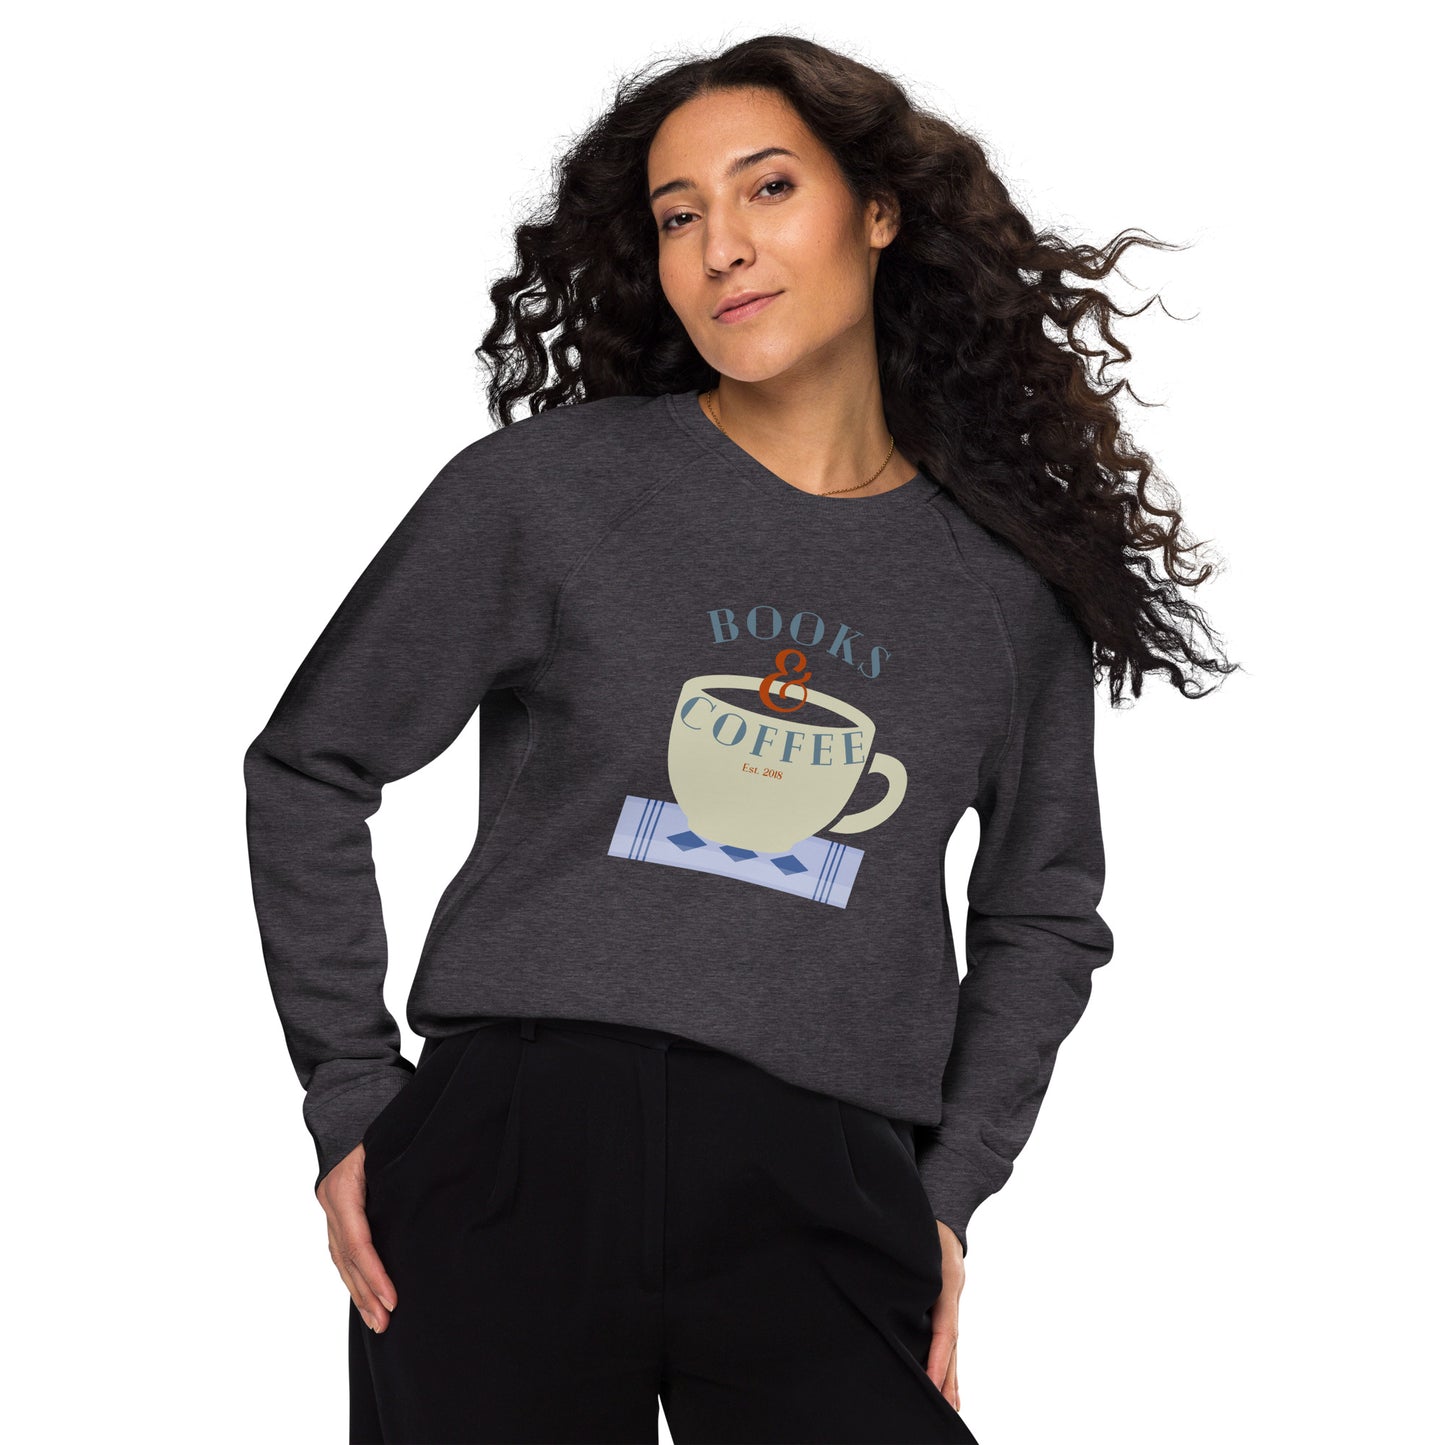 Books & Coffee | Unisex organic raglan sweatshirt